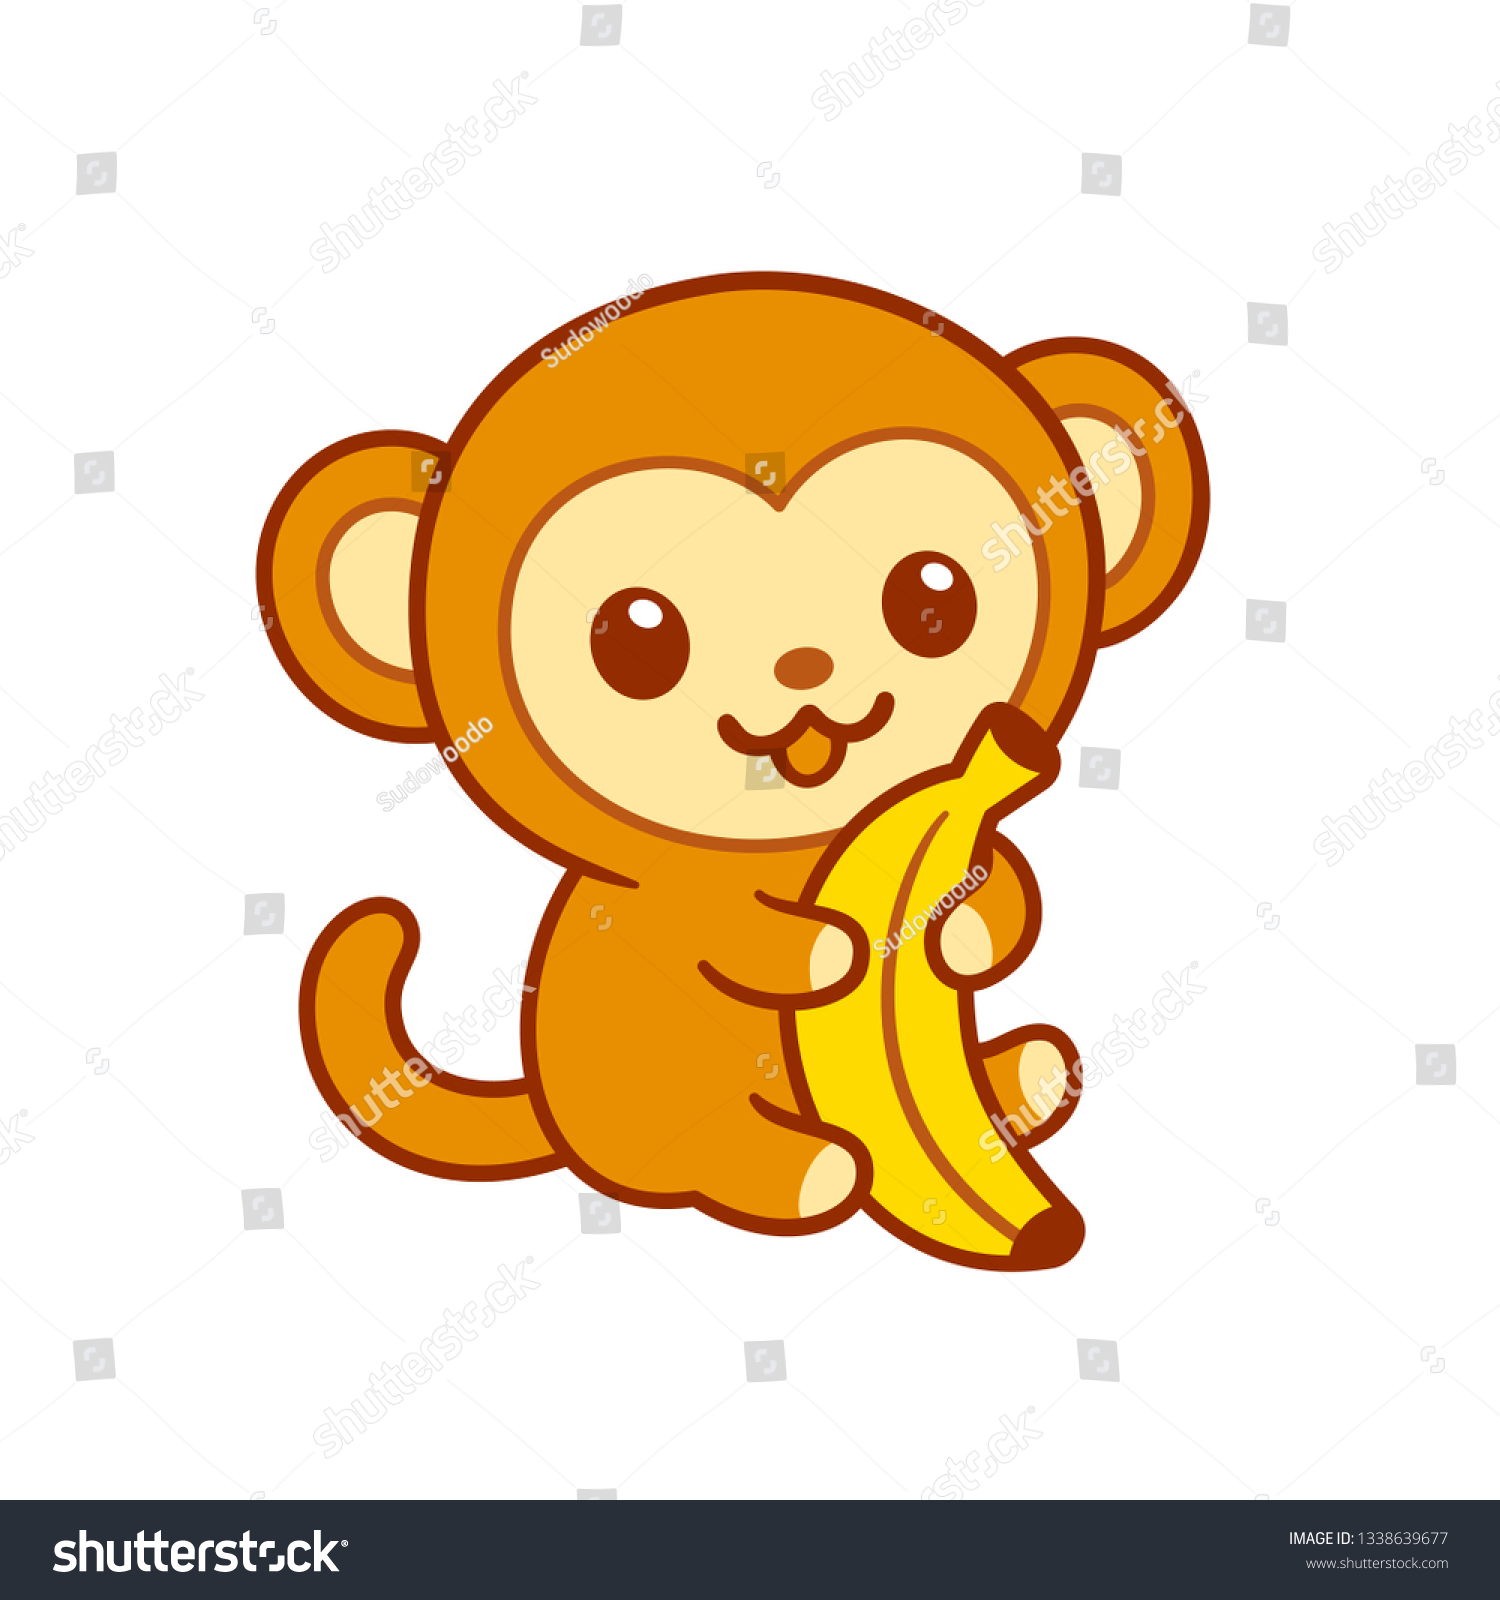 cute cartoon monkey drawing